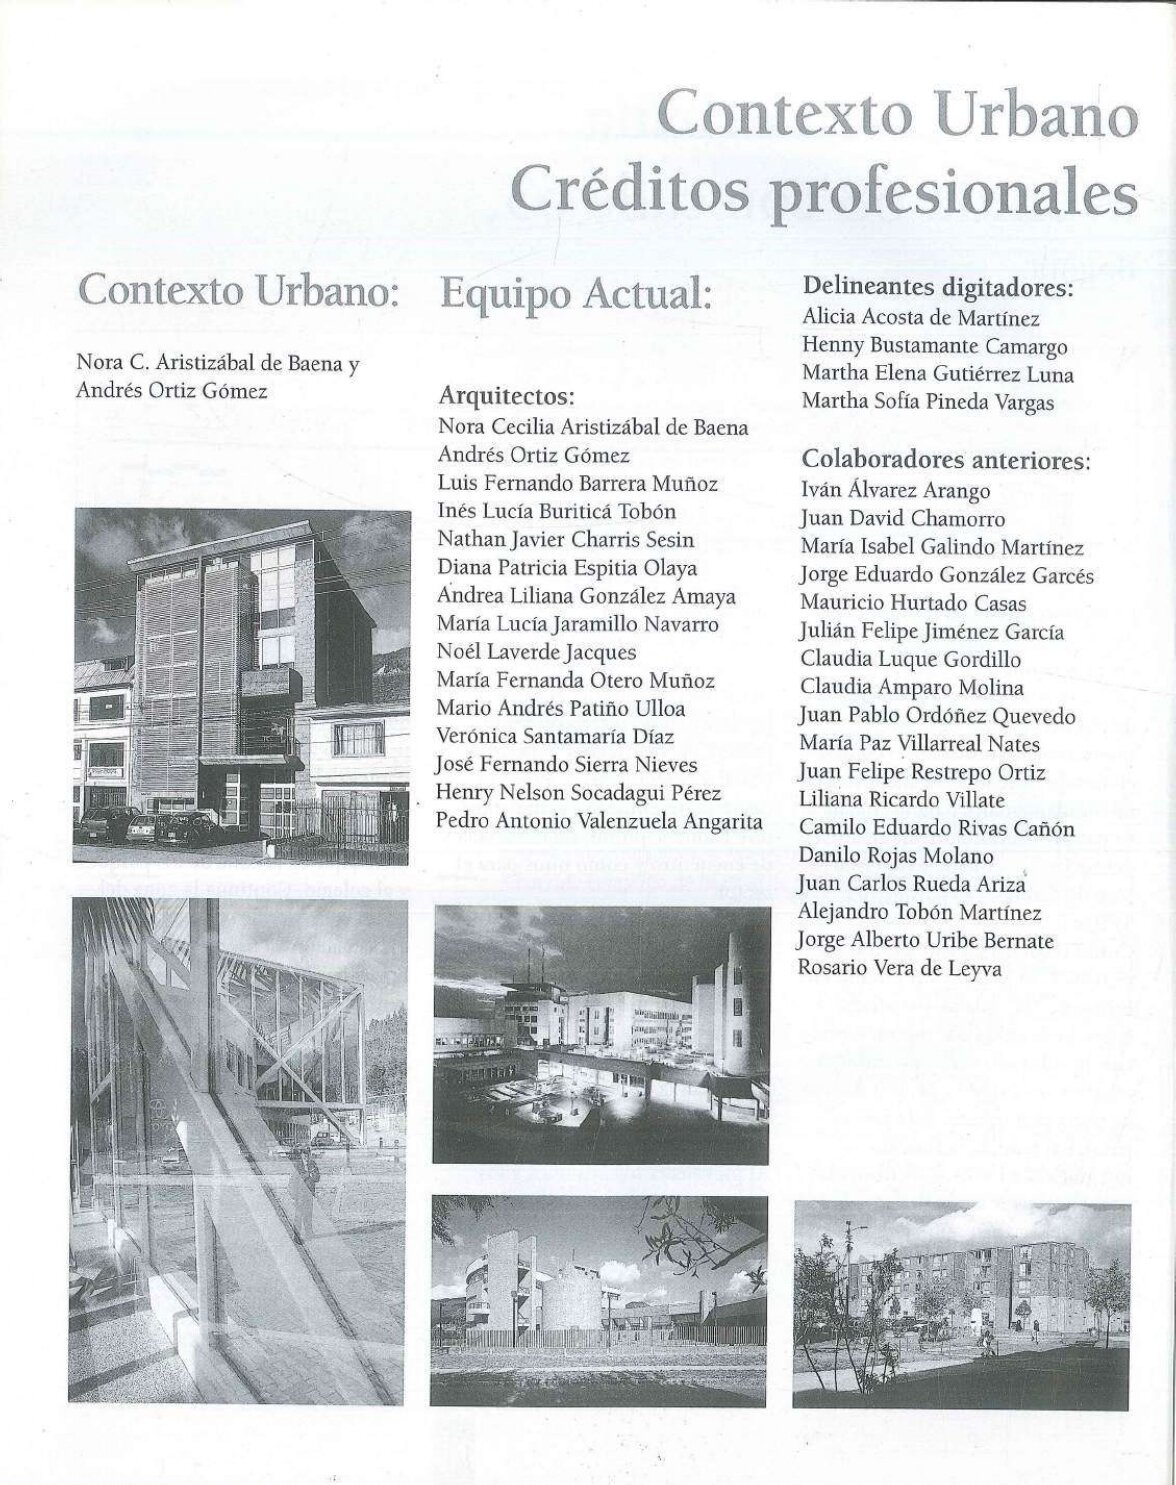 2002_Contexto Urbano- Obra reciente 1995-2002. REVISTA PROA 1_compressed (1)_page-0084.jpg